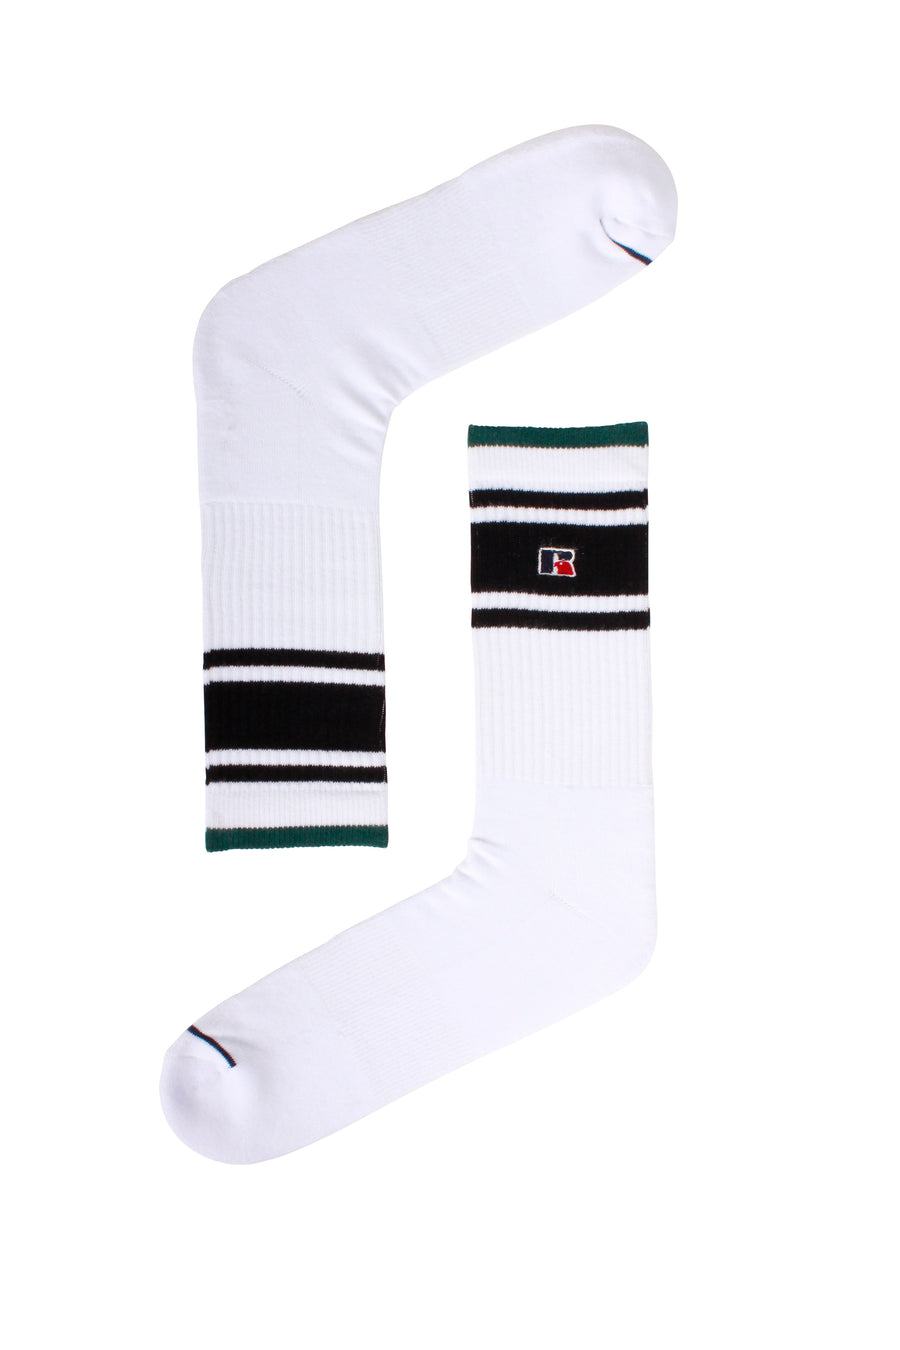 Essential Atlanta Fash Single Socks - White/Black